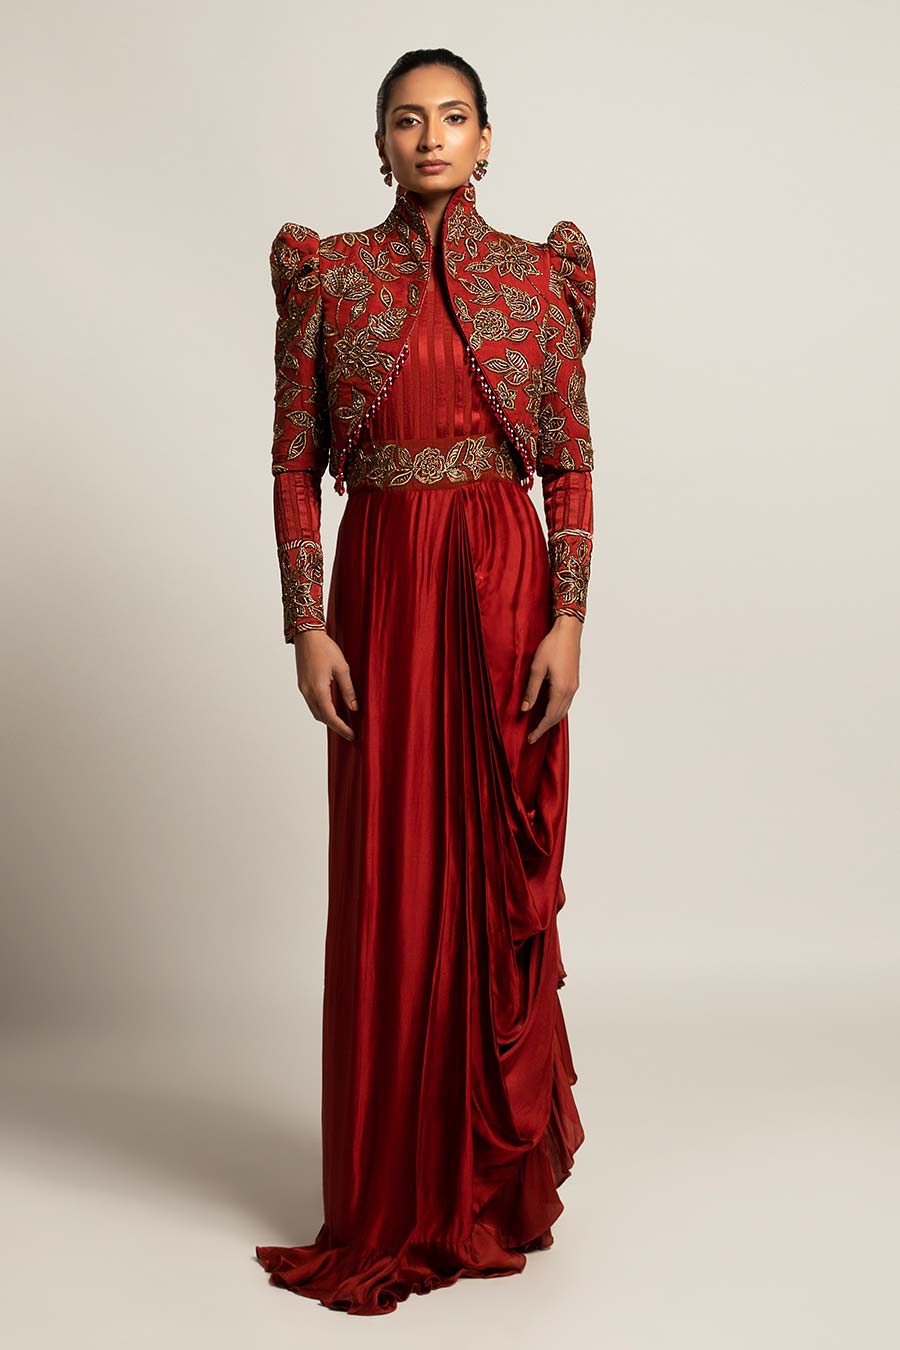 Buy Shree Designer Saree Gripping Black Color Net Designer Gown Online -  Best Price Shree Designer Saree Gripping Black Color Net Designer Gown -  Justdial Shop Online.